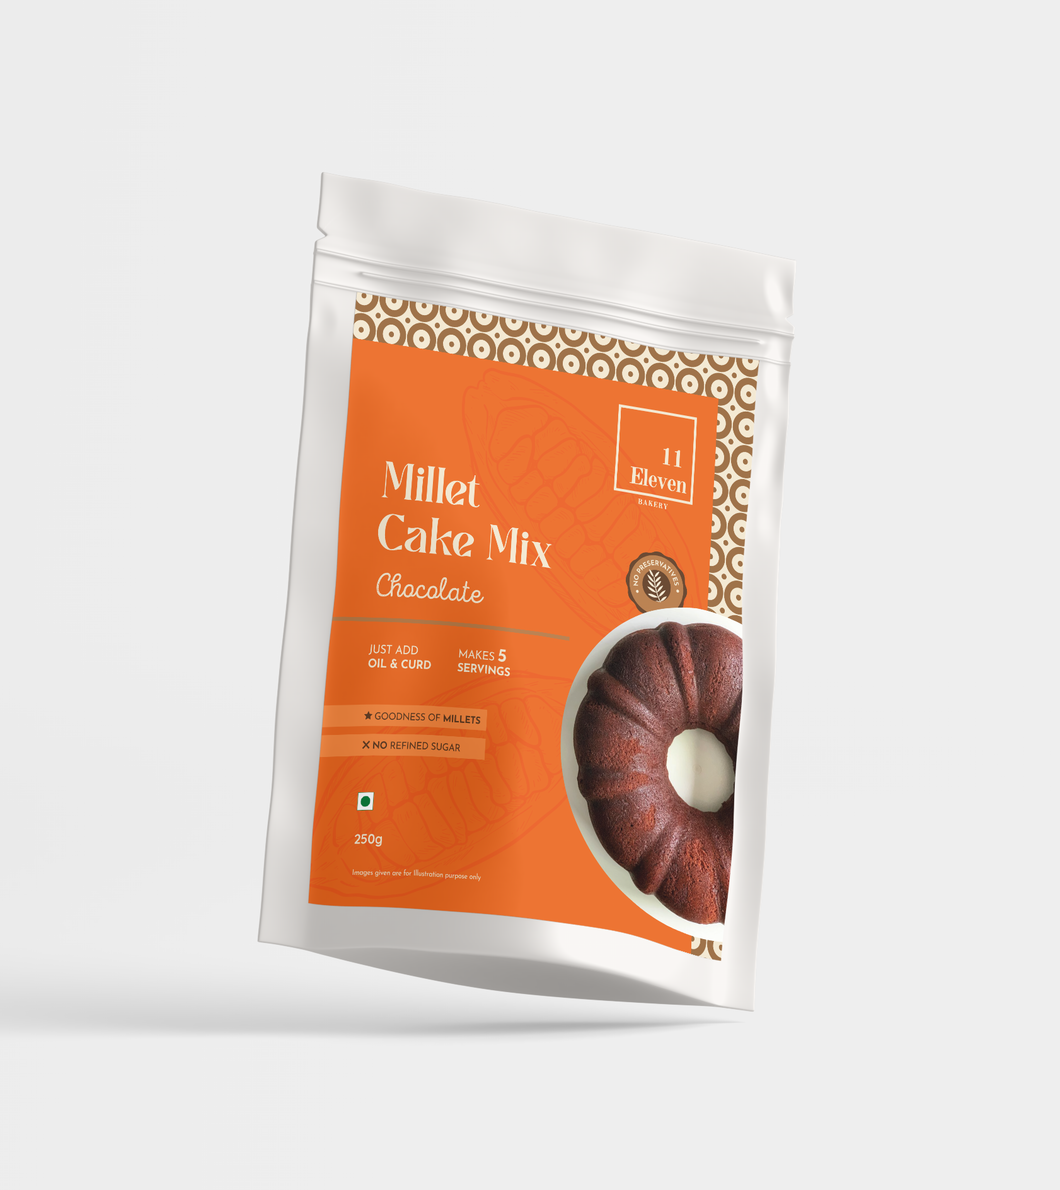 Millet Cake Mix- Chocolate